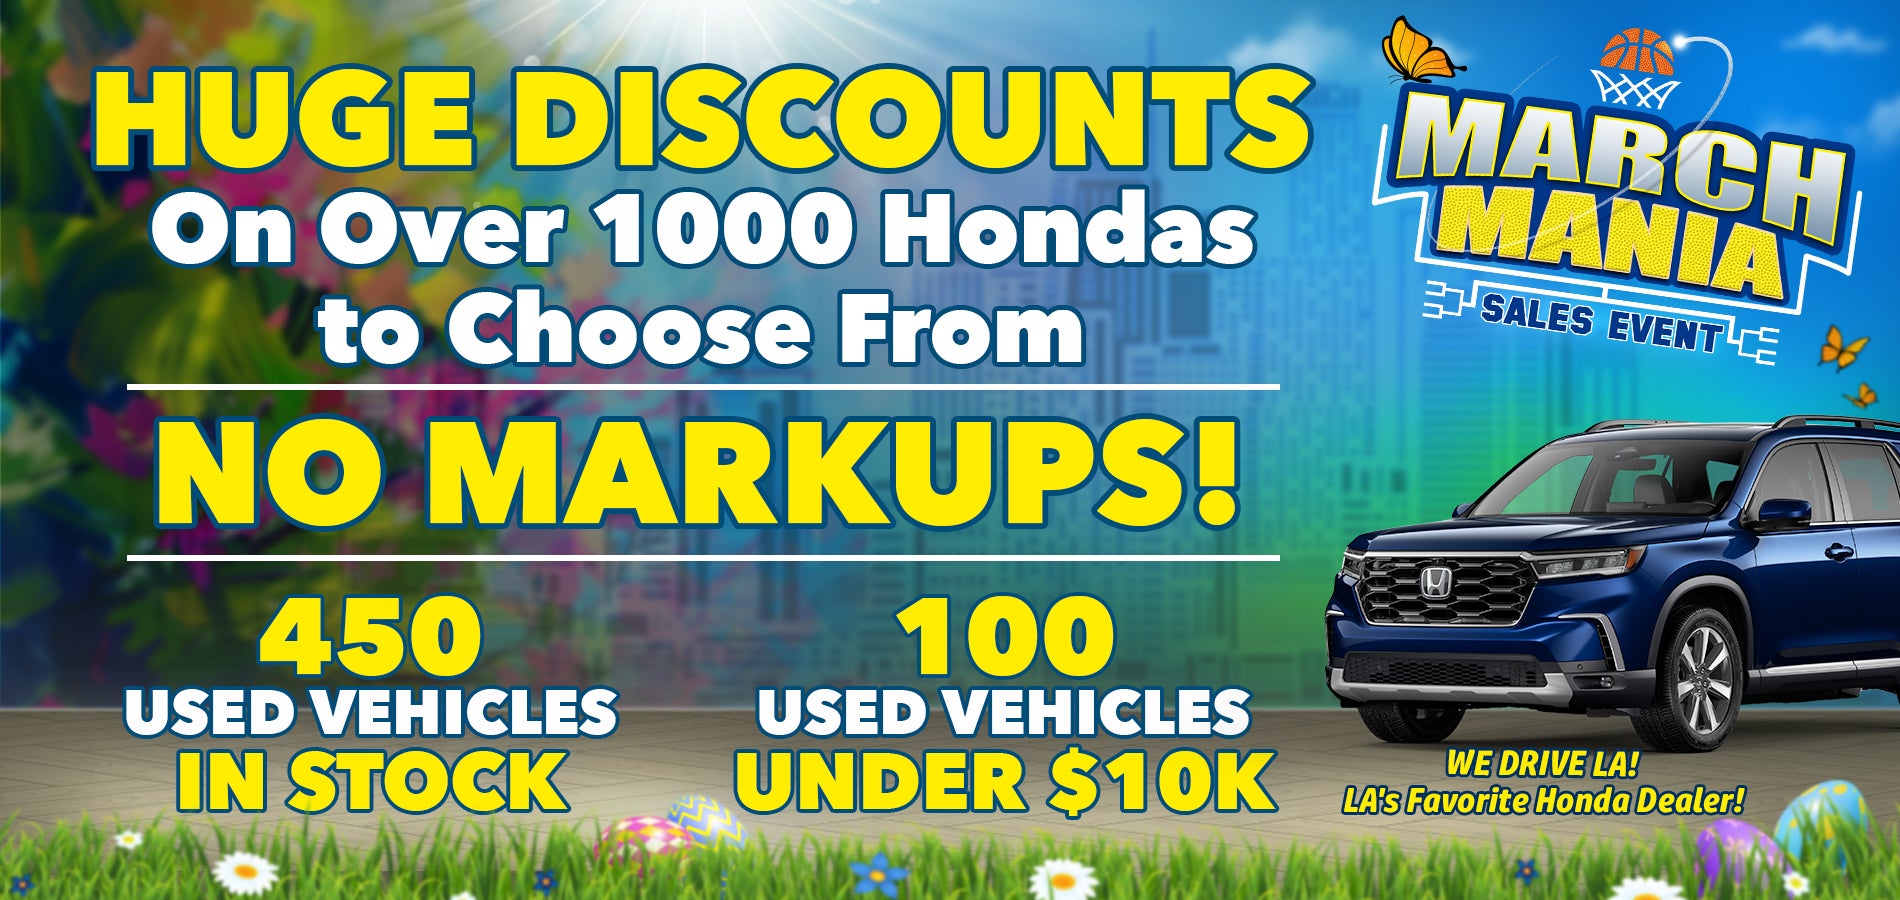 Huge Discounts on over 1000 new Honda's at Honda DTLA